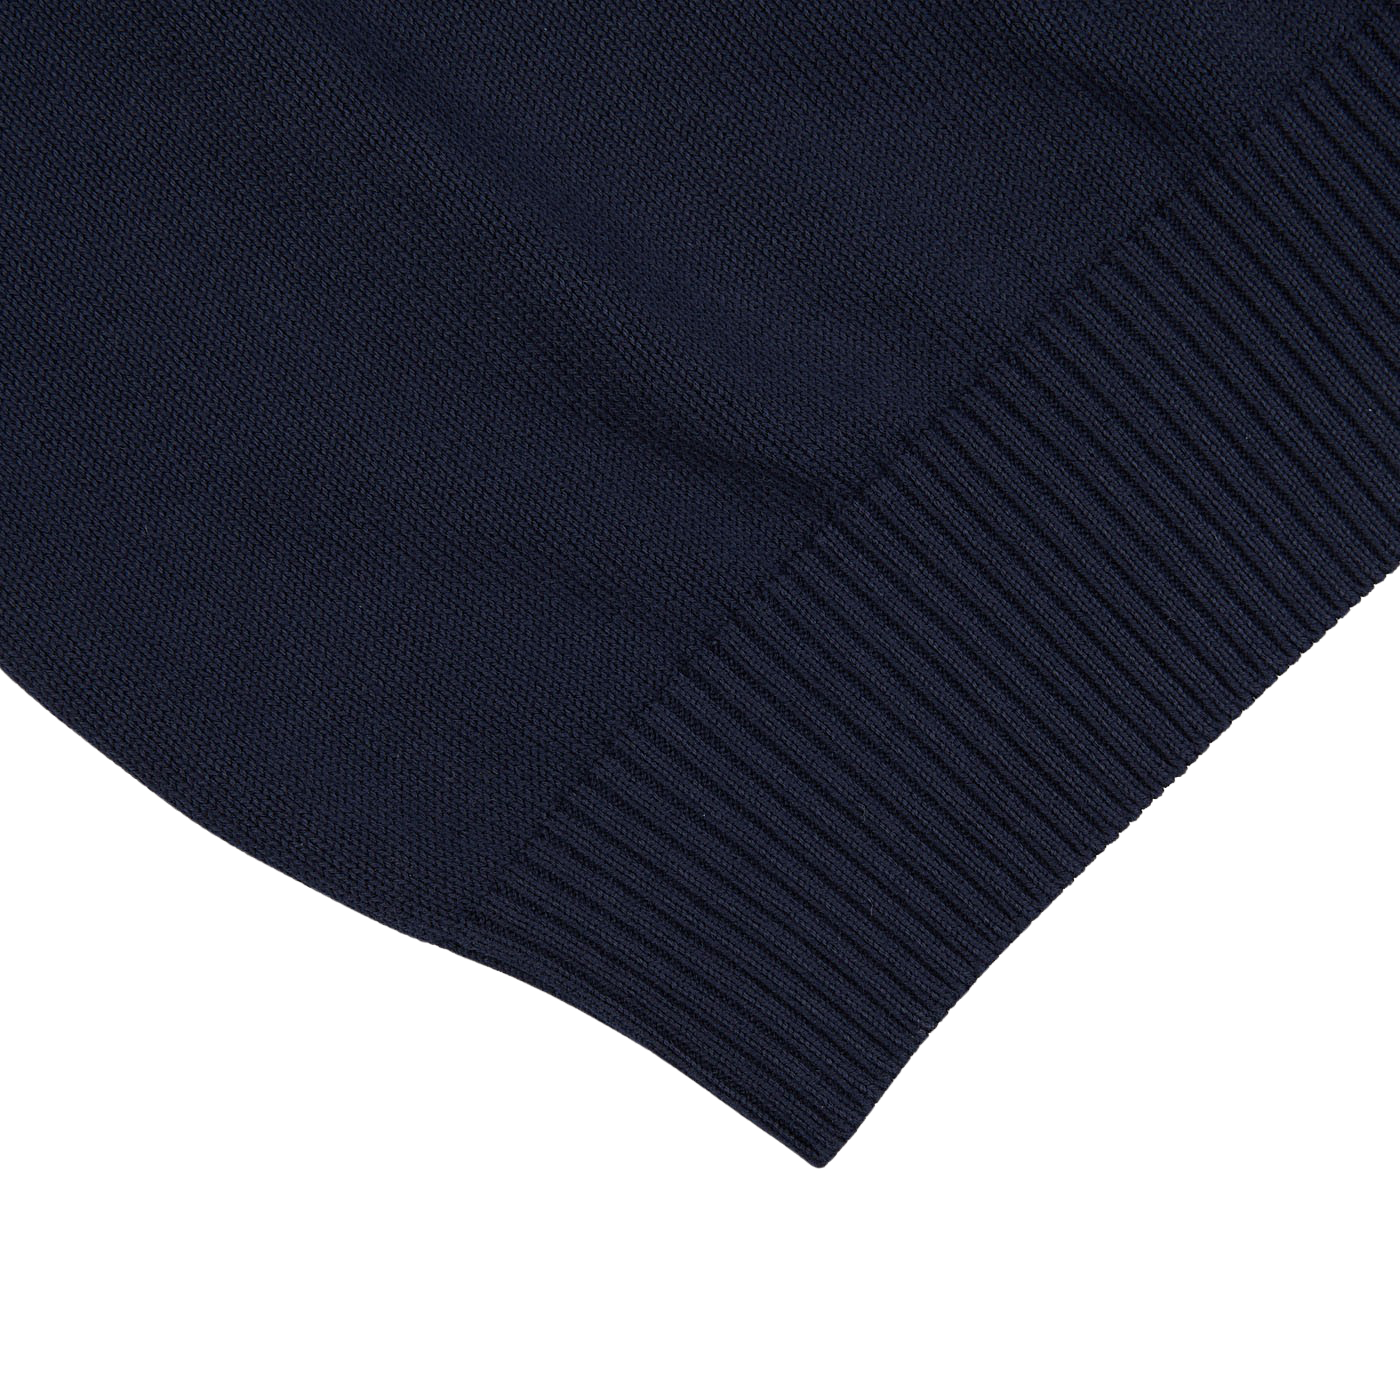 A close up of a Gran Sasso navy blue Egyptian cotton crewneck sweater.